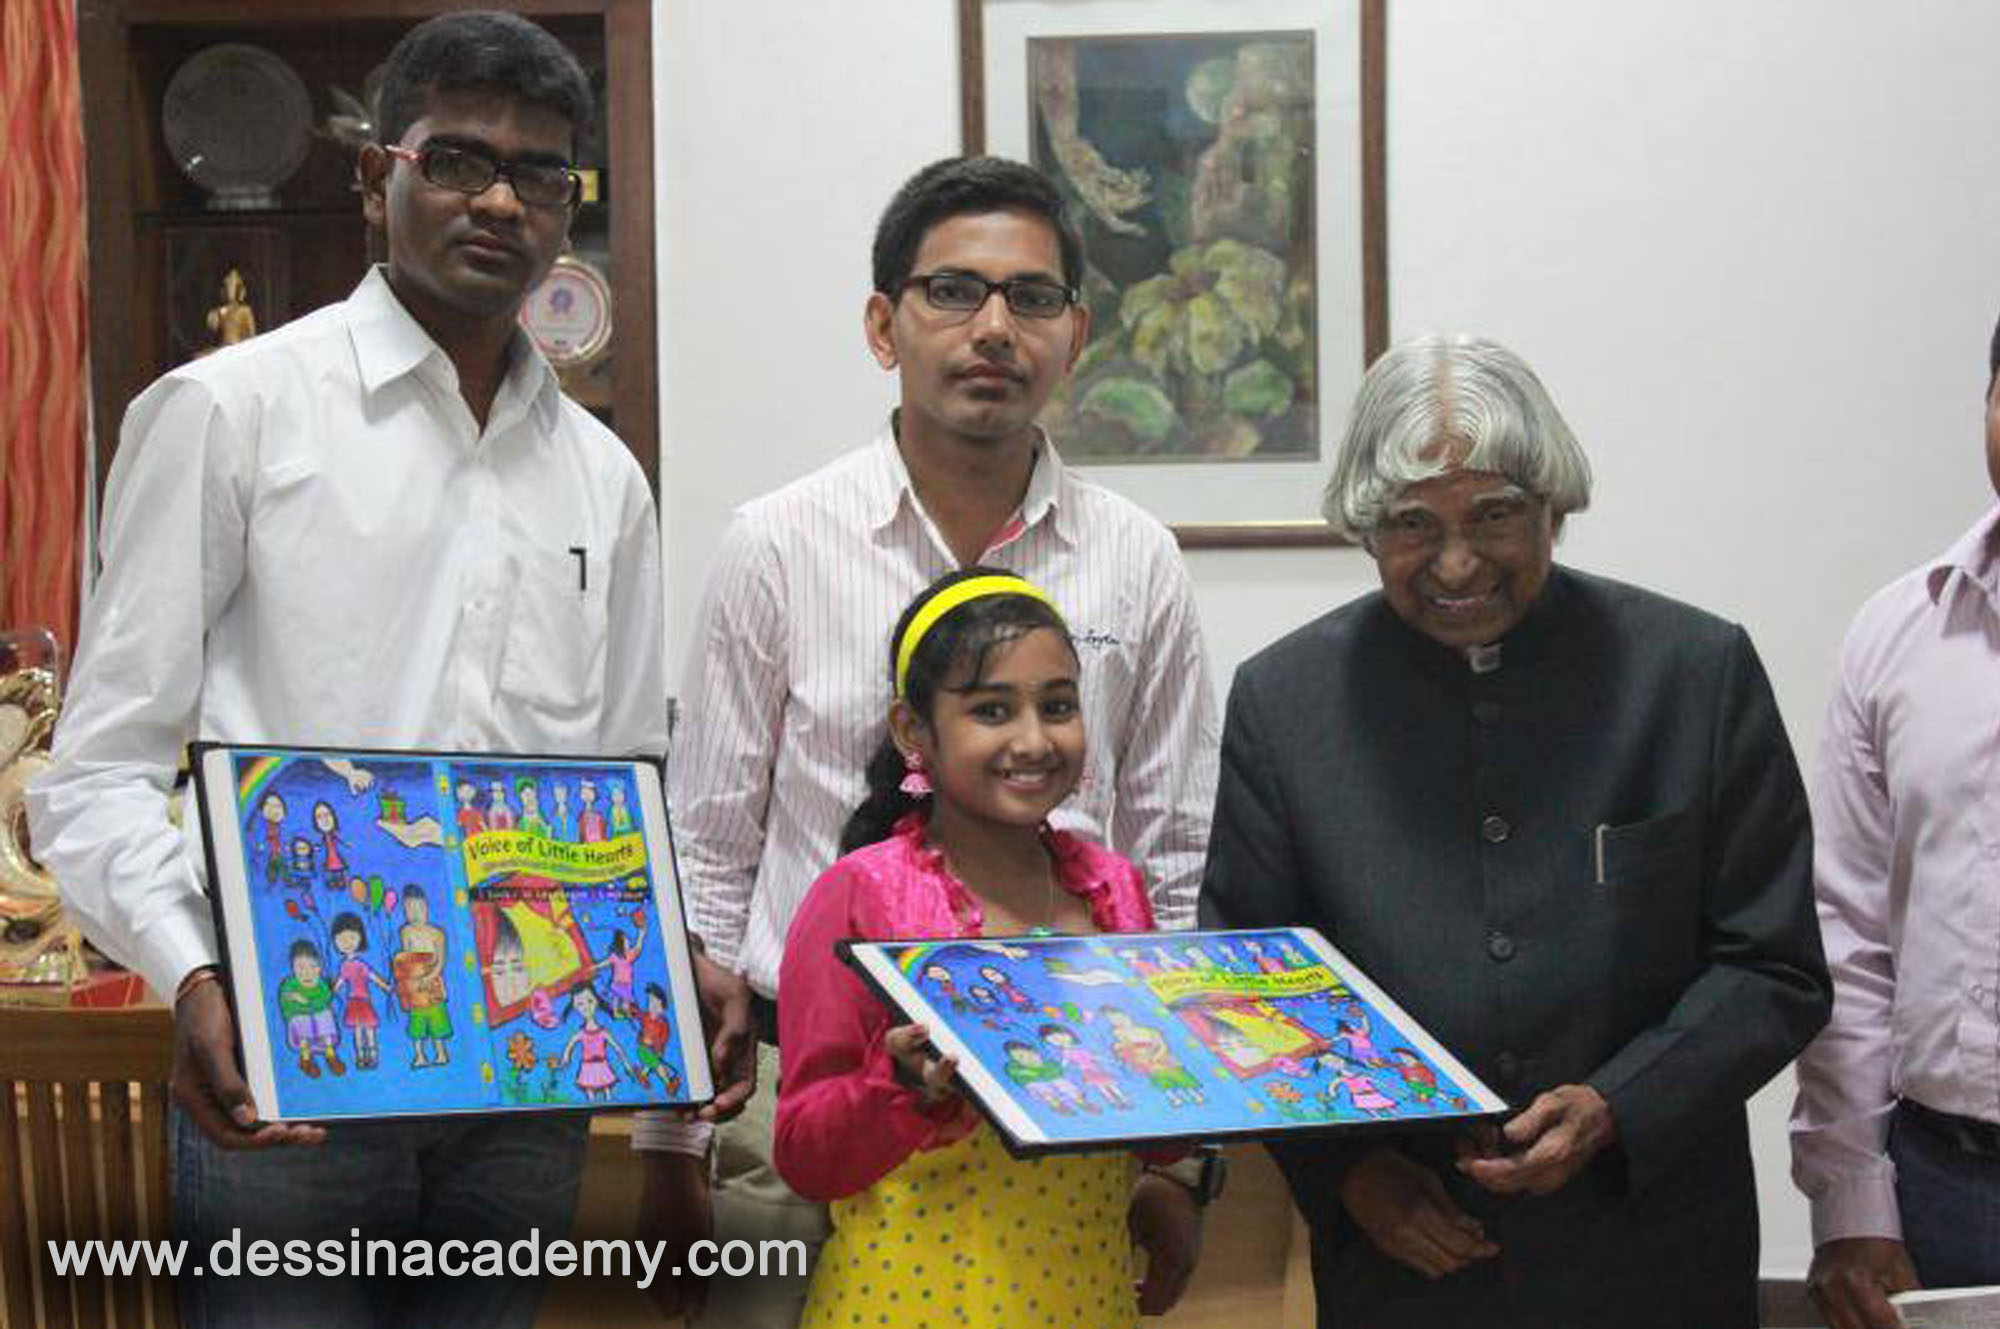 Dessin School of Arts Students Acheivement 1, Dessin School of Arts, colouring classes for kids in Marine Drive, Mumbai